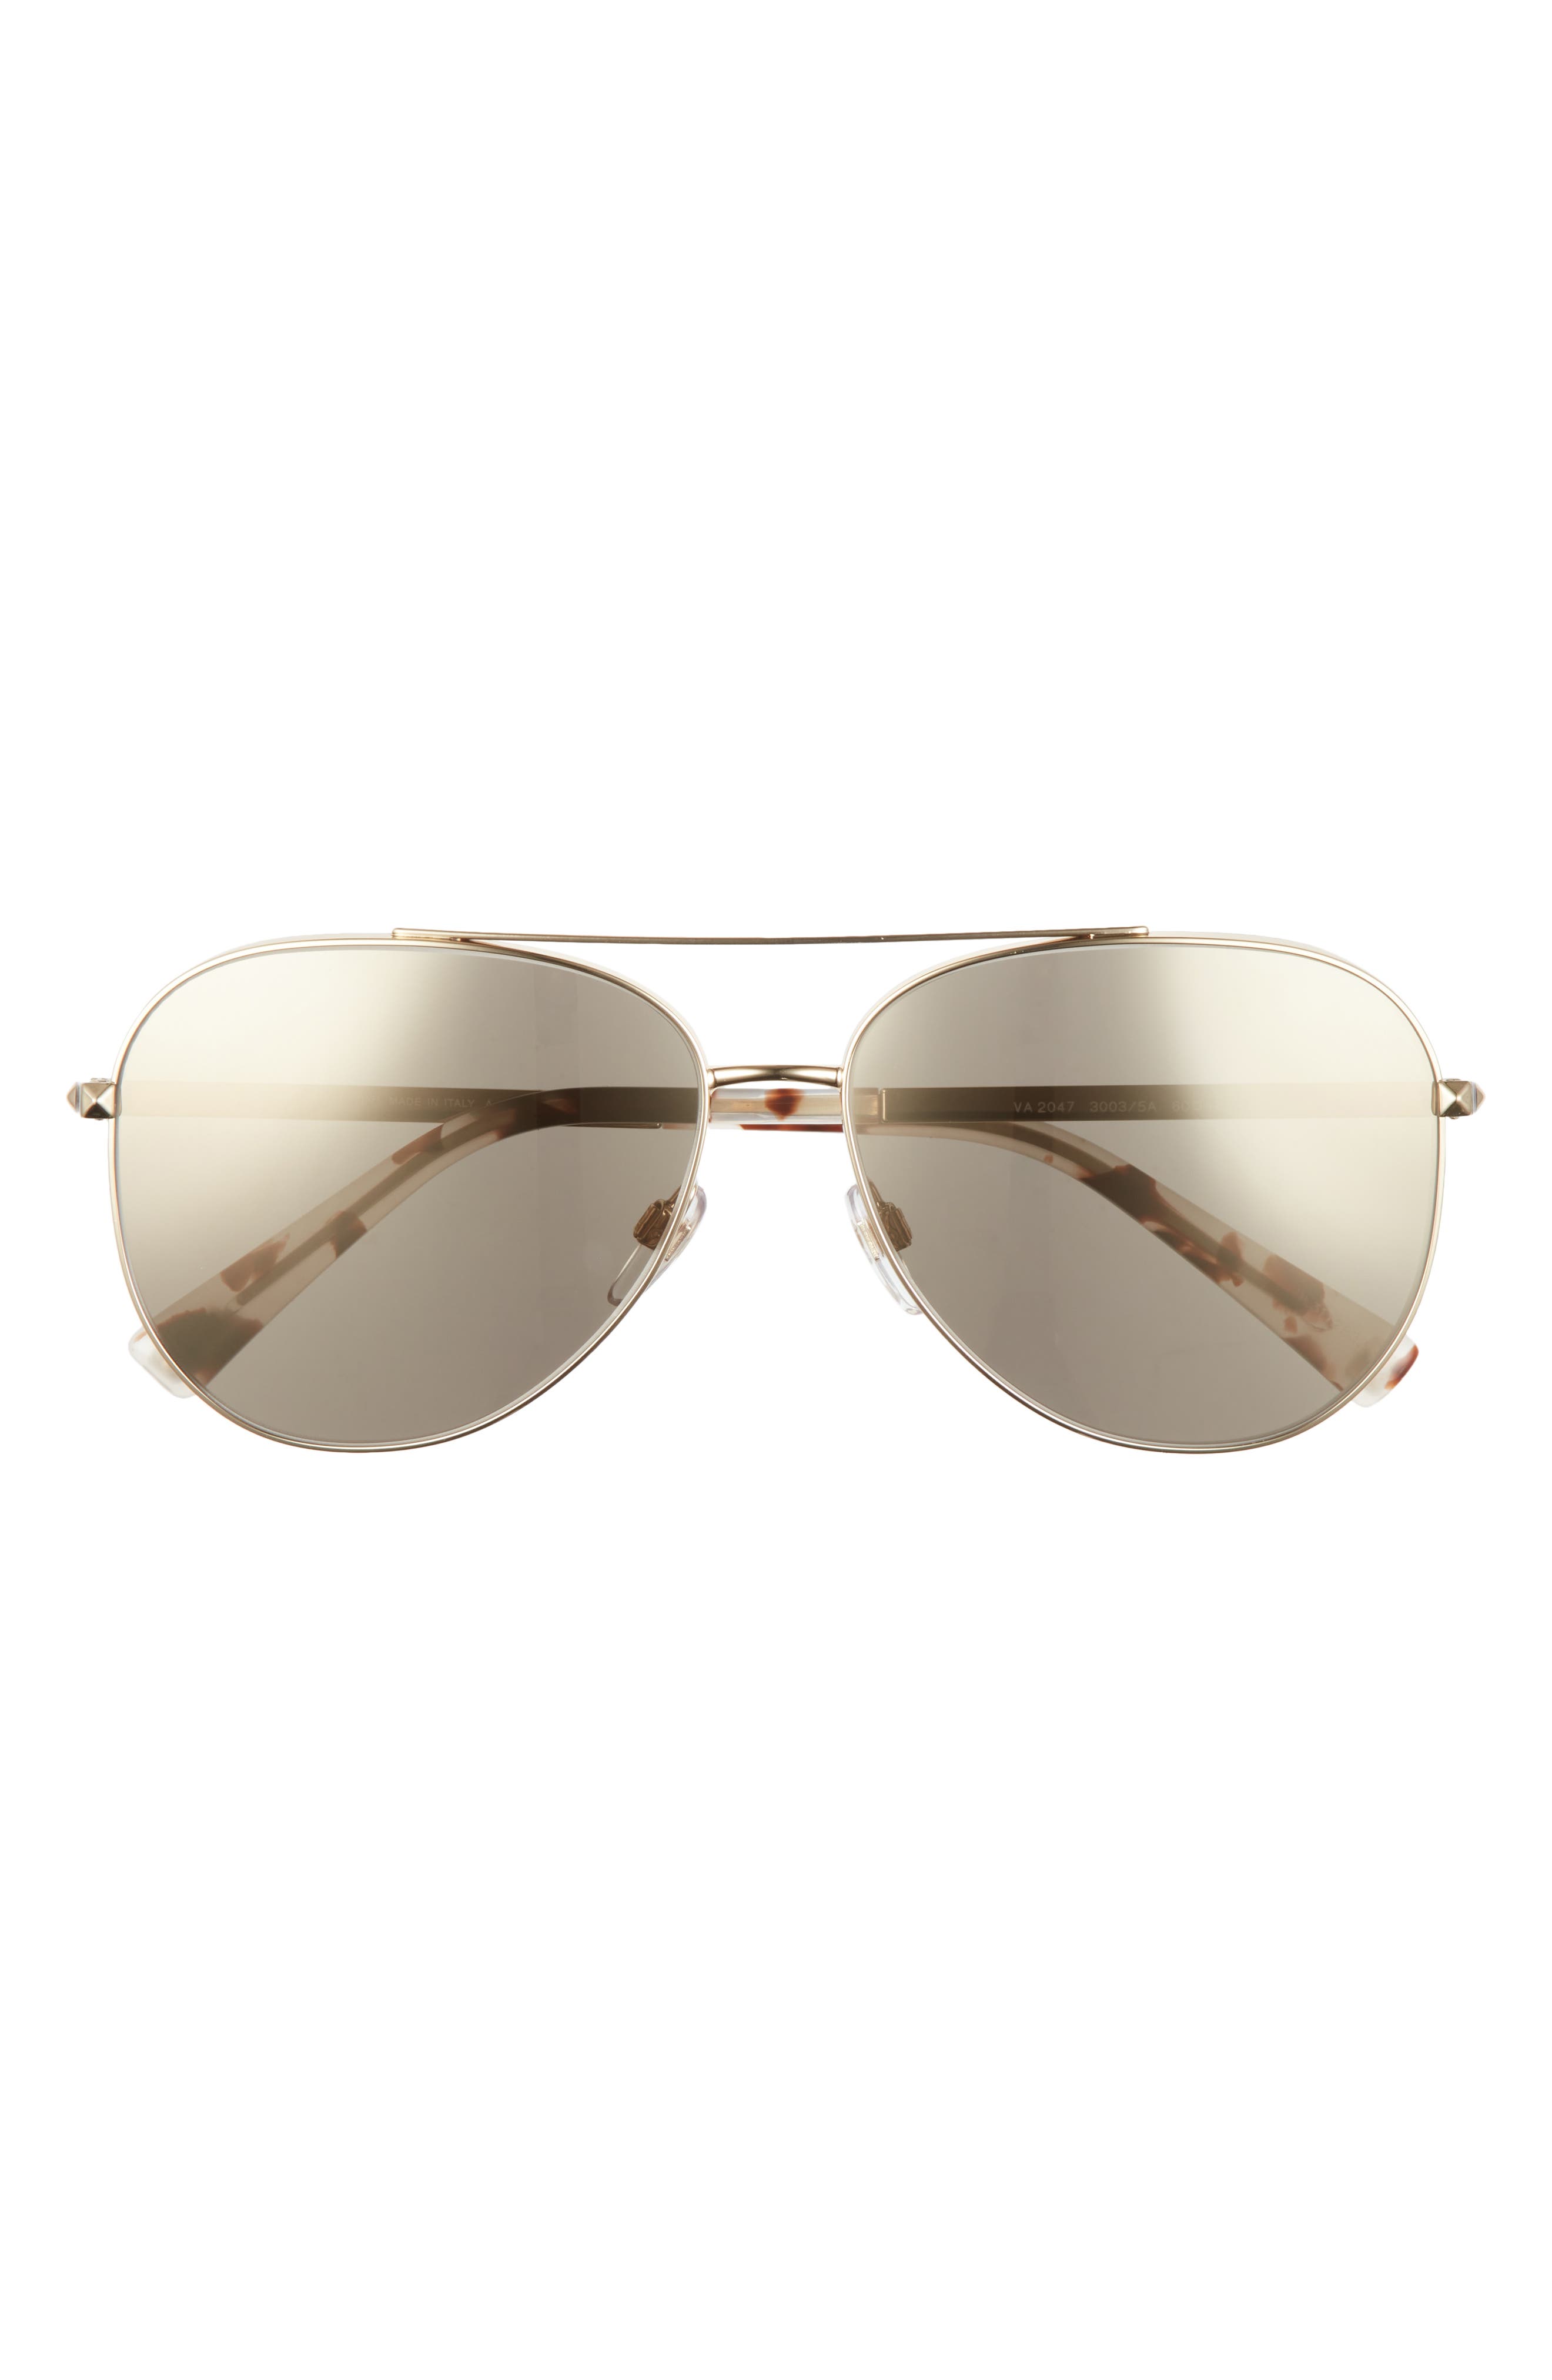 Valentino Havana Gold 60mm Aviator Sunglasses in Pale Gold/Mirror Gold at Nordstrom